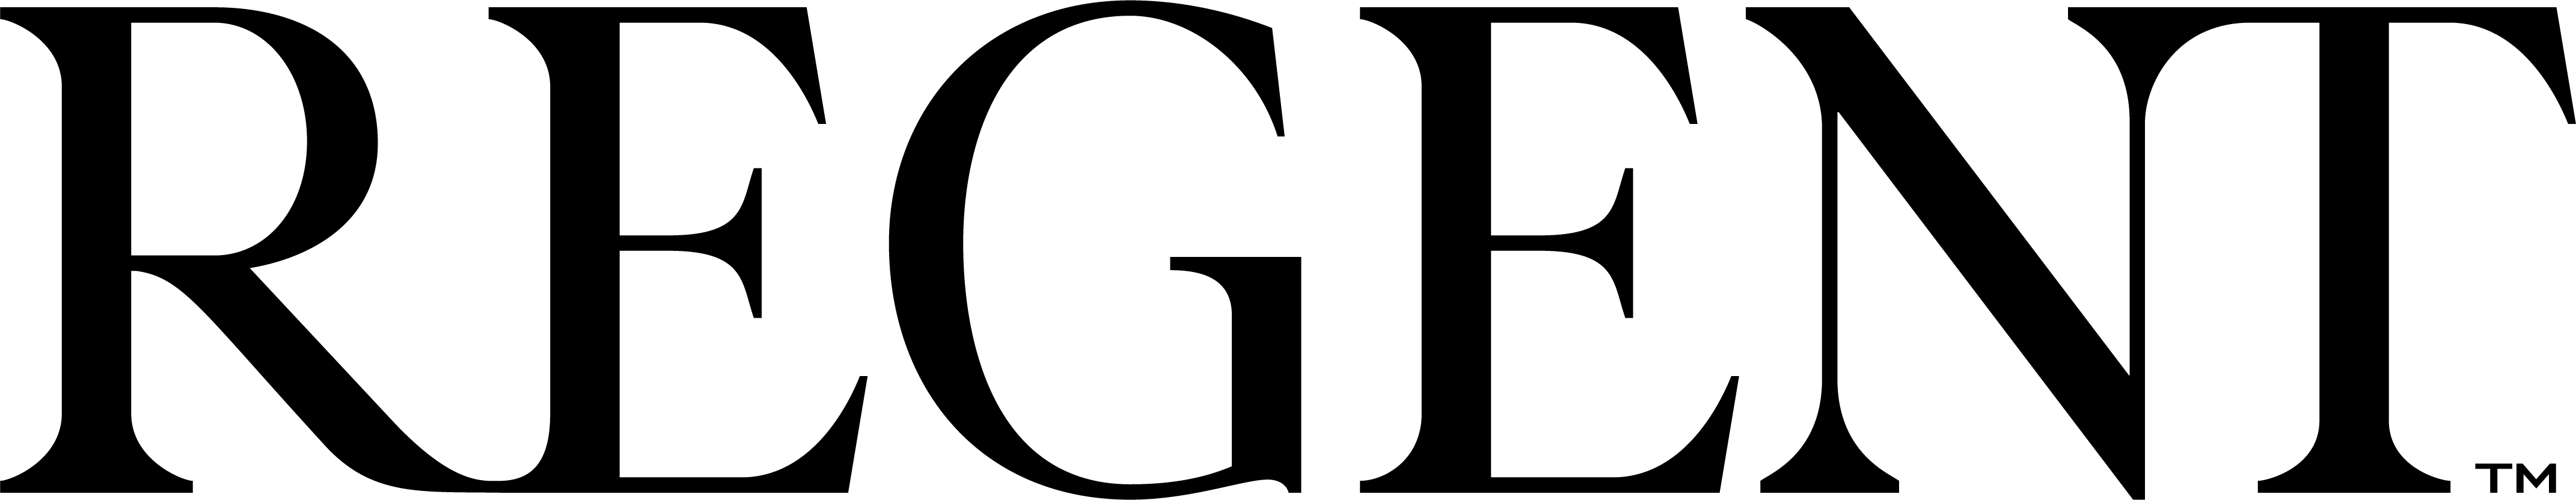 Regent hotels & resorts (new logo)